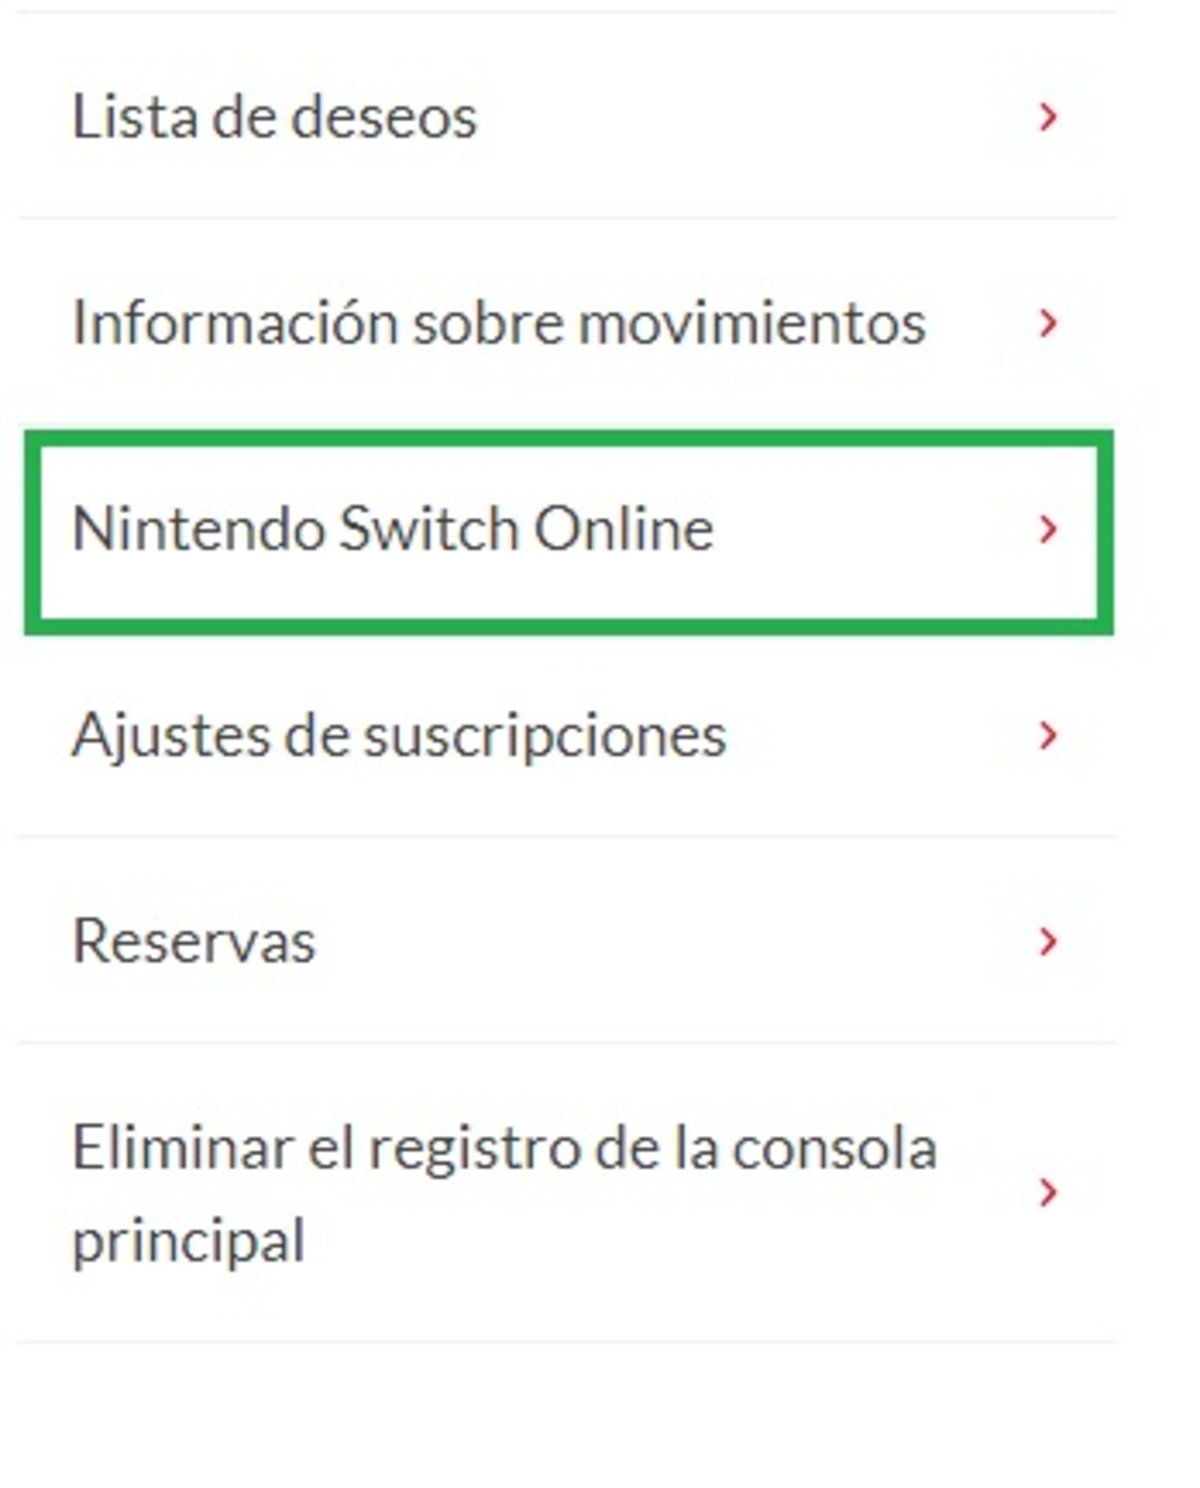 Cancelar renovación automática de Nintendo Switch Online